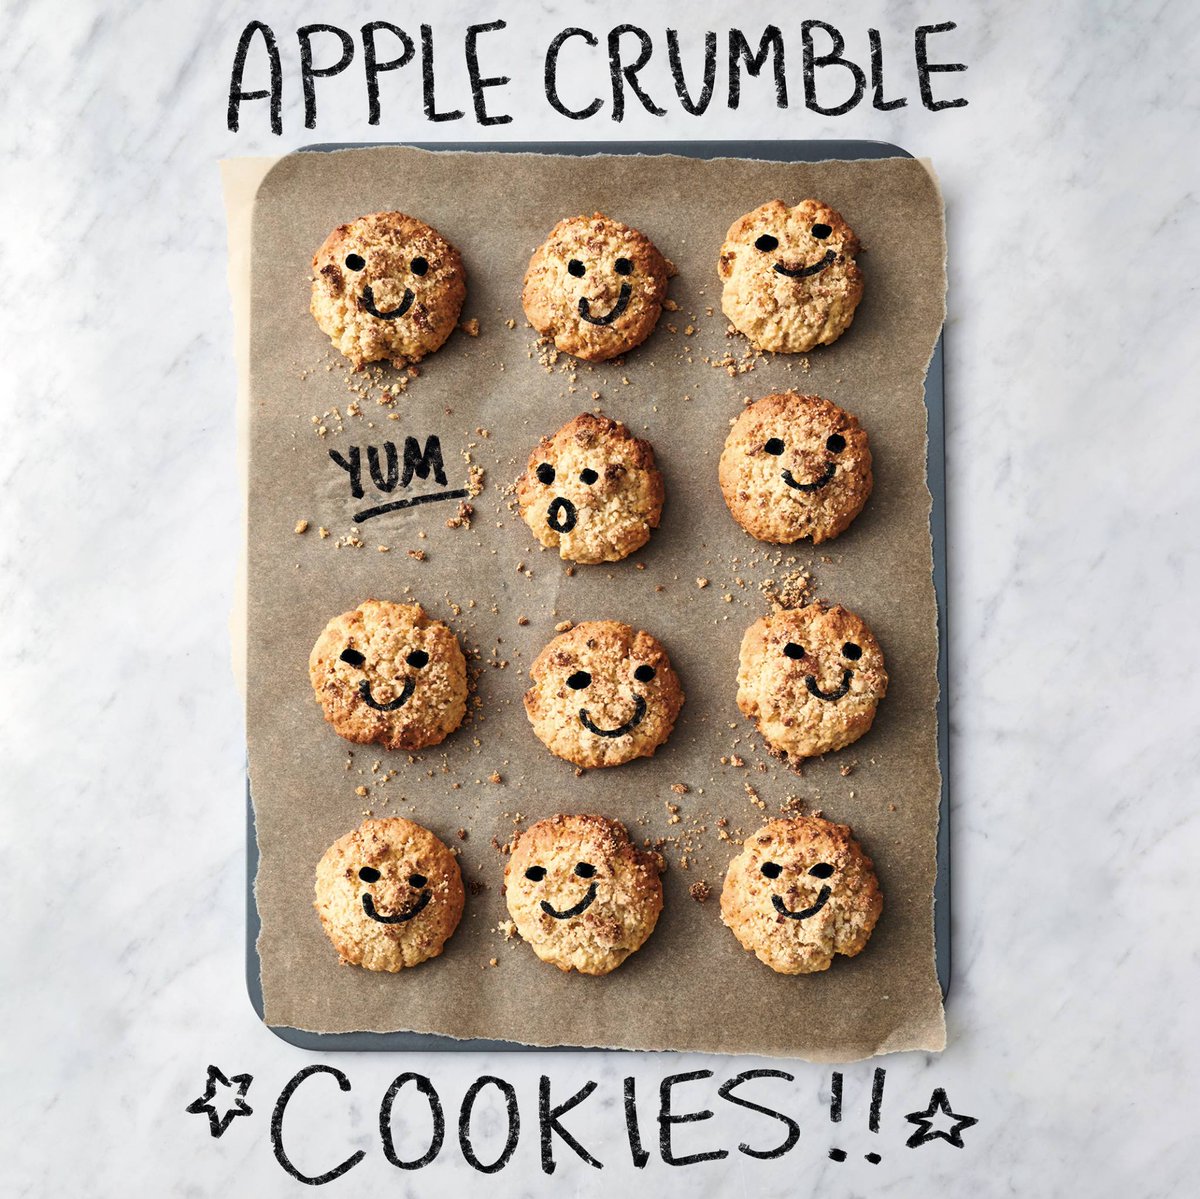 Weekend baking = Jamie's Apple Crumble Cookies! ???????? Get the recipe in #QuickAndEasyFood: https://t.co/orFsFoBGsV https://t.co/hYsaFVehYB